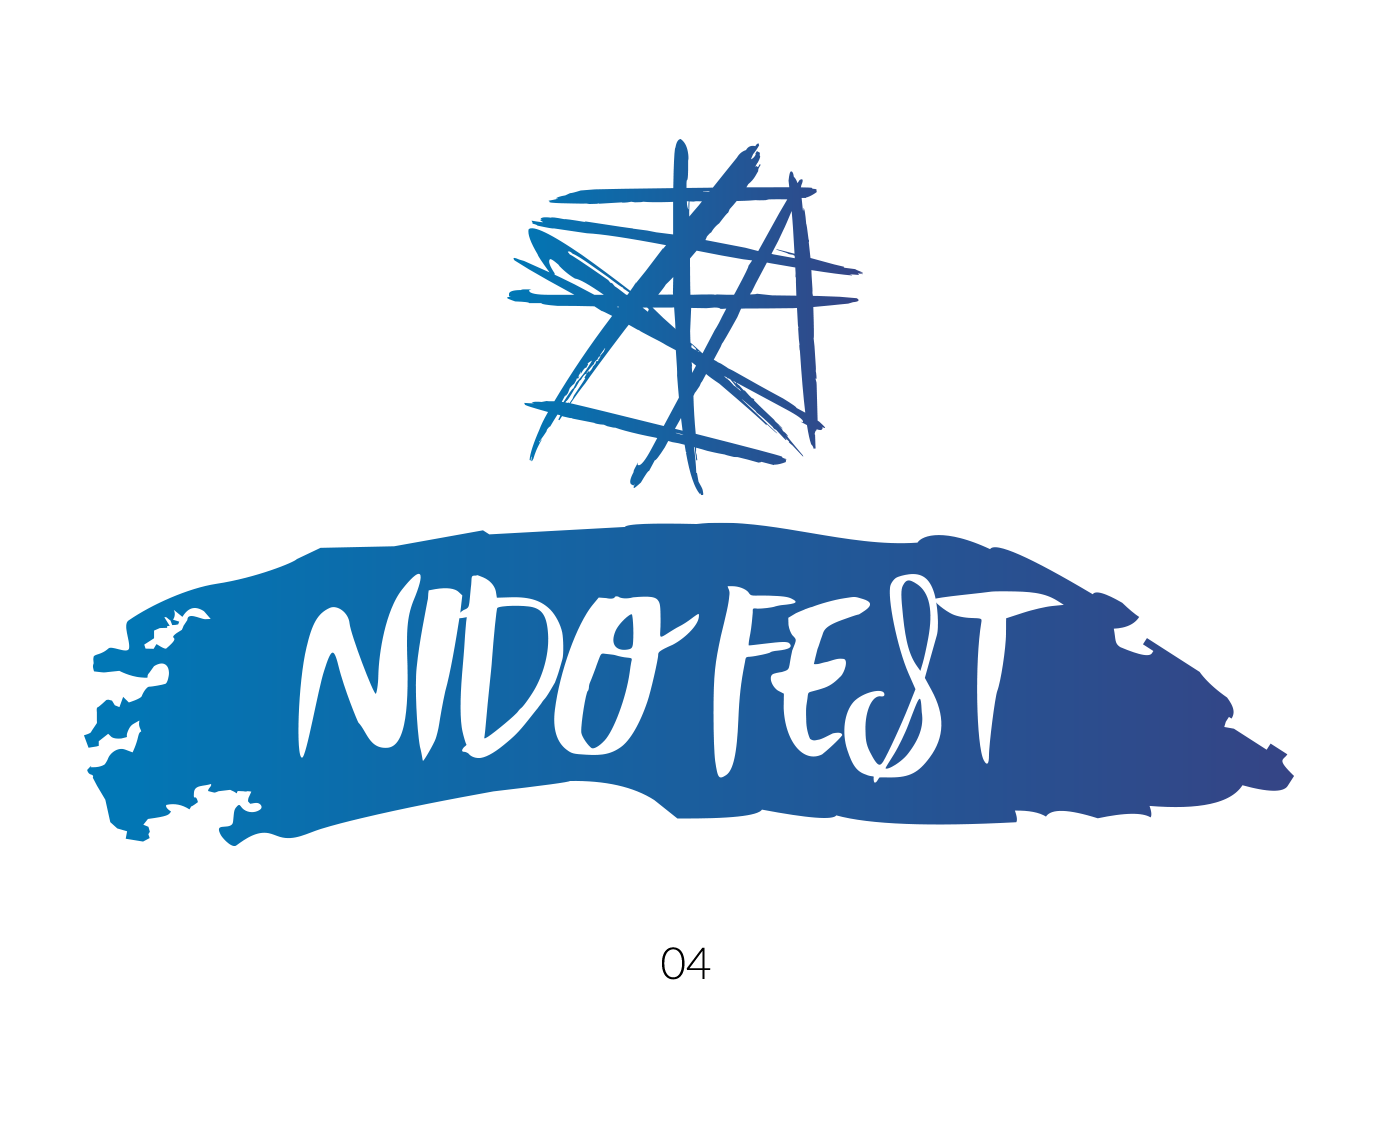 NidoFest logo blue